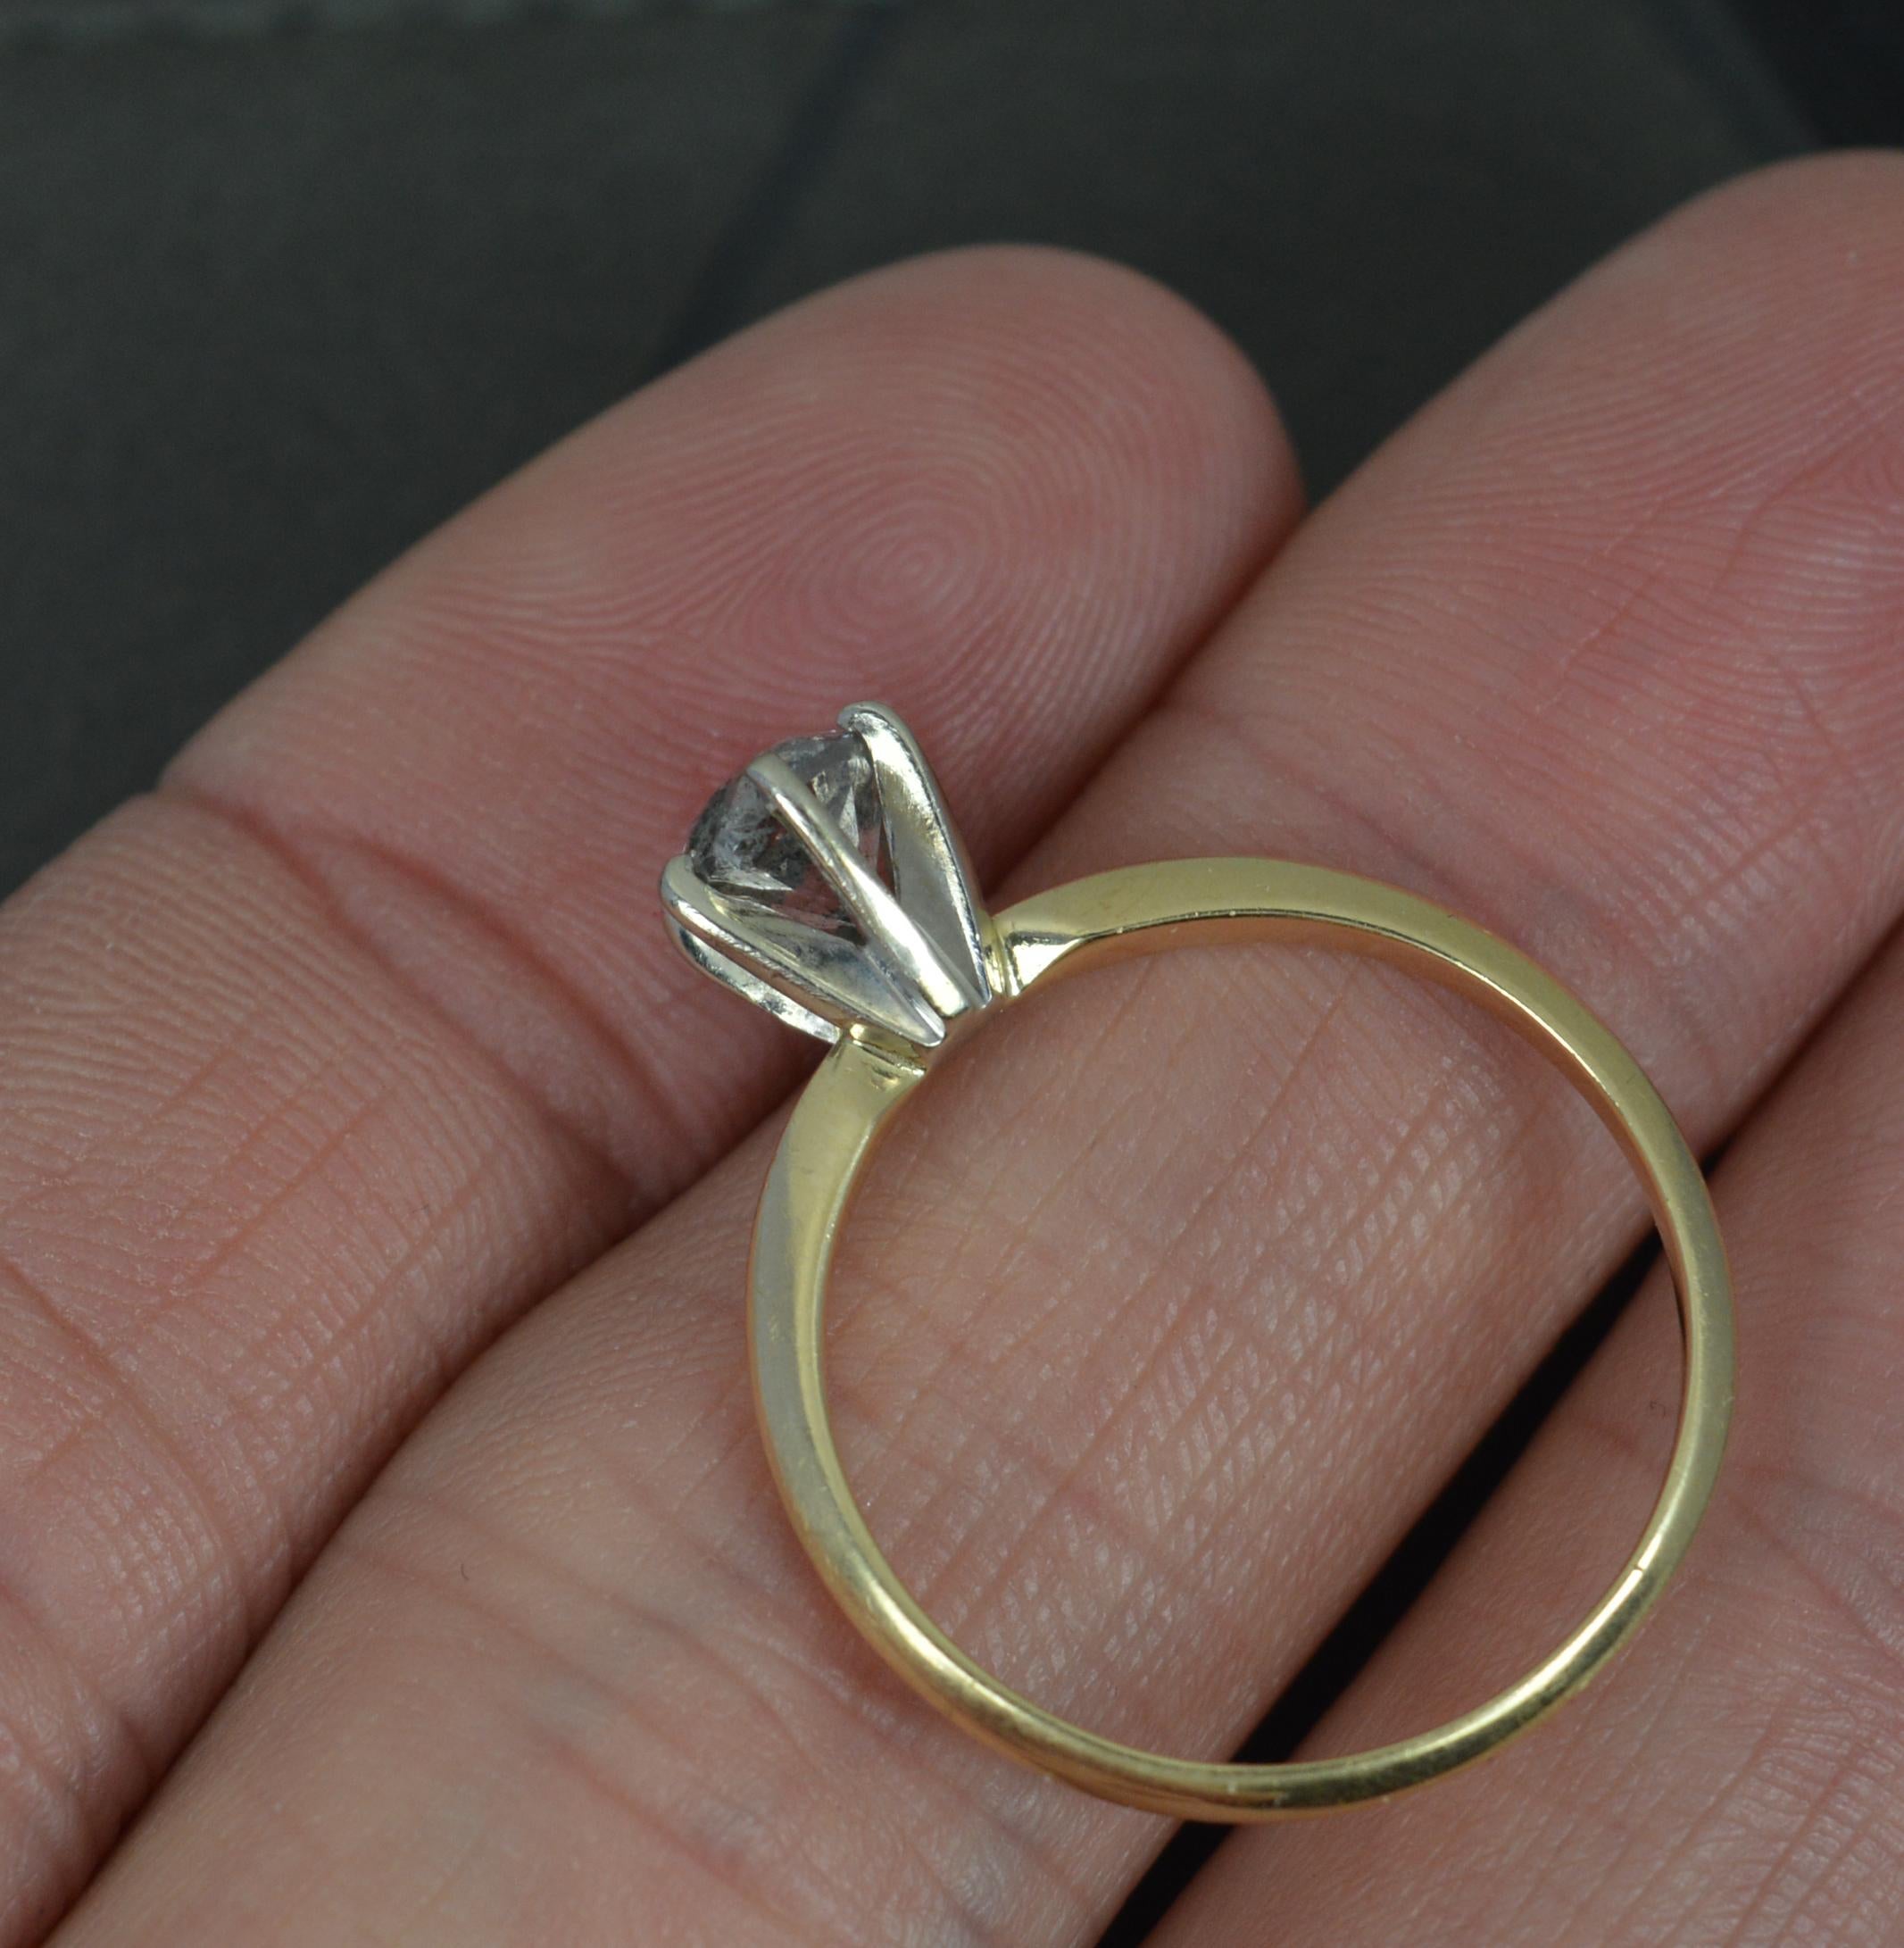 0.7 carat diamond ring